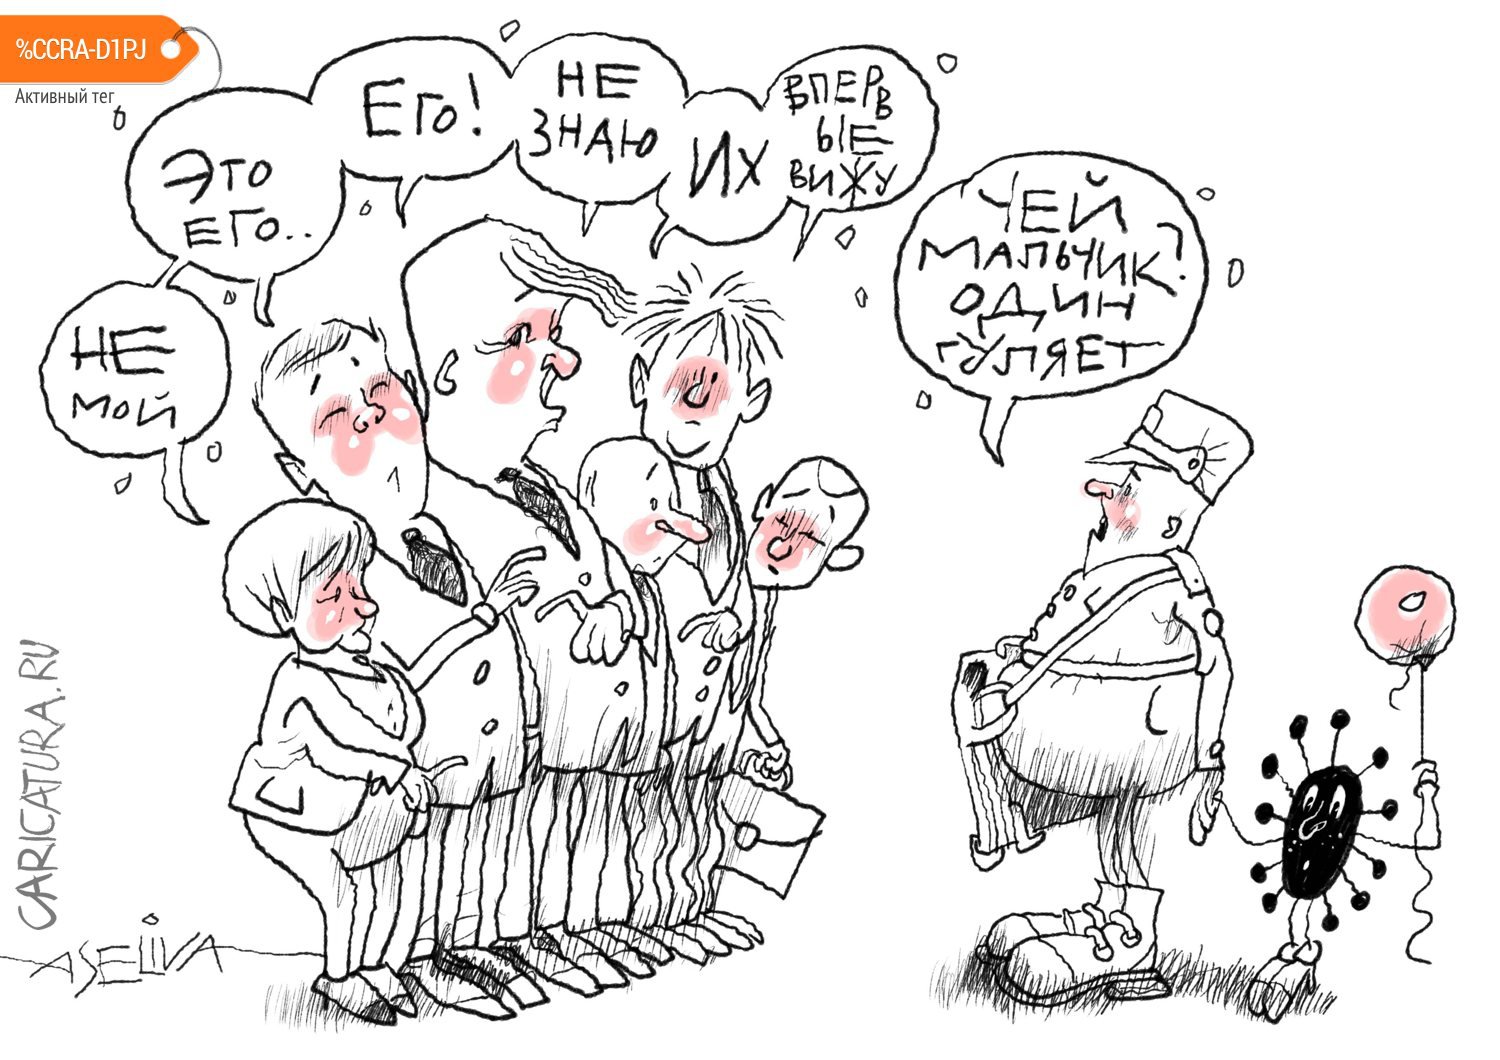 Карикатура "Кто виноват?", Андрей Селиванов